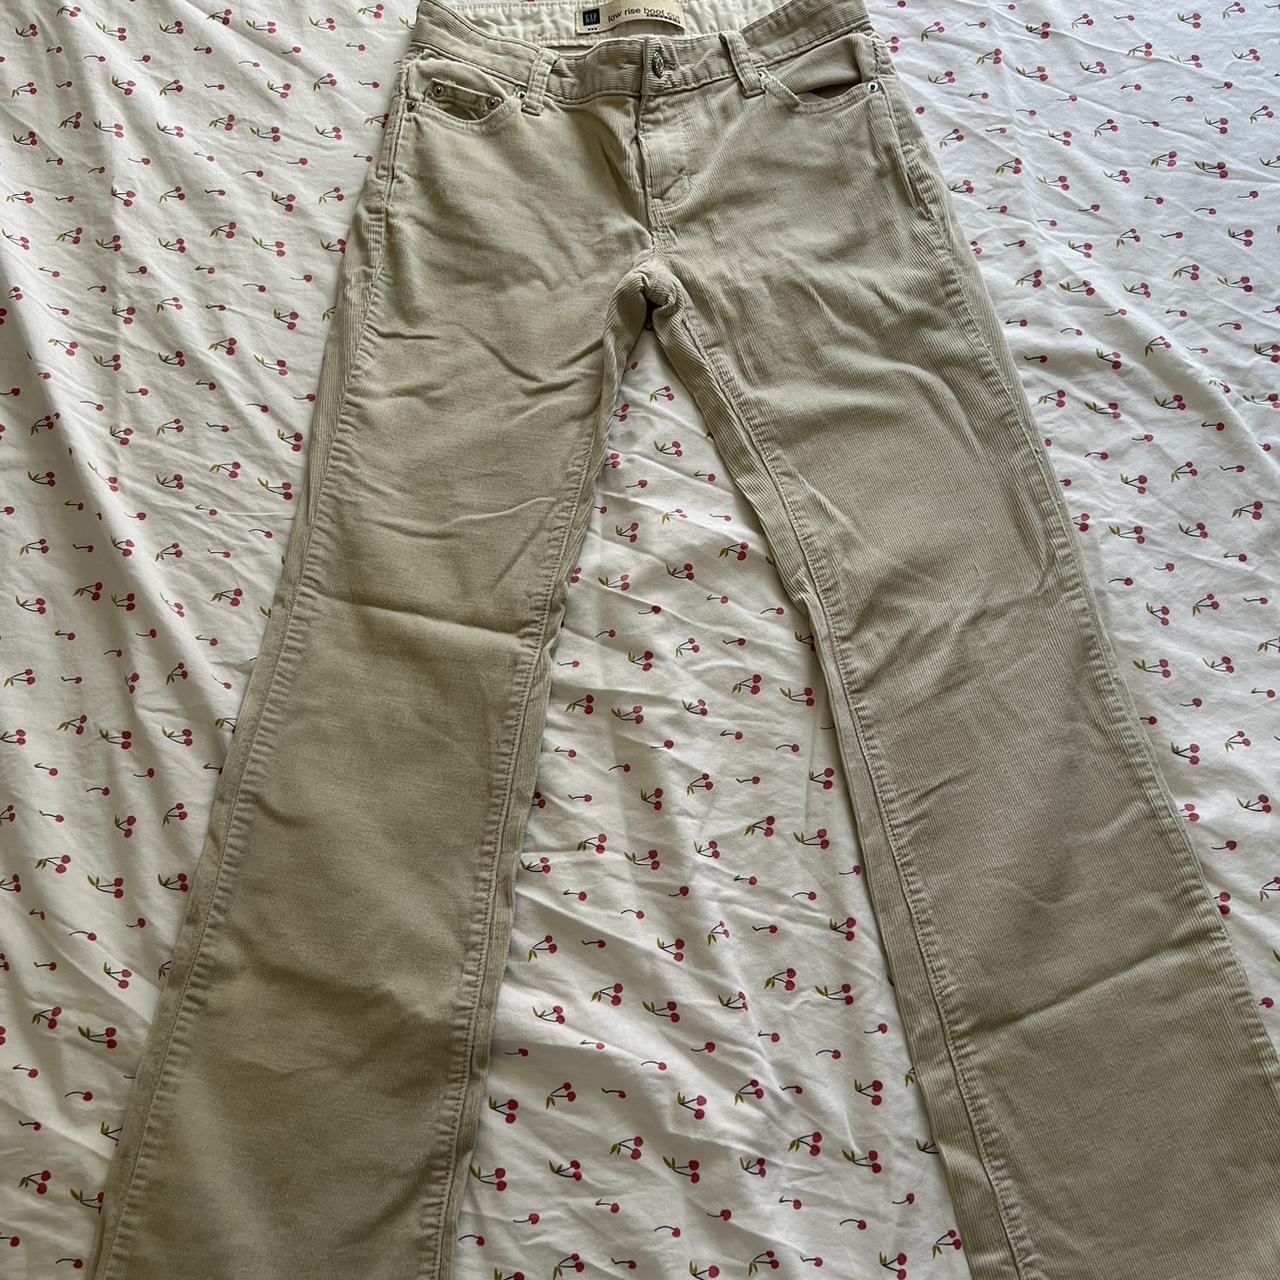 Gap low rise bootcut pants cream colored size 1 - Depop